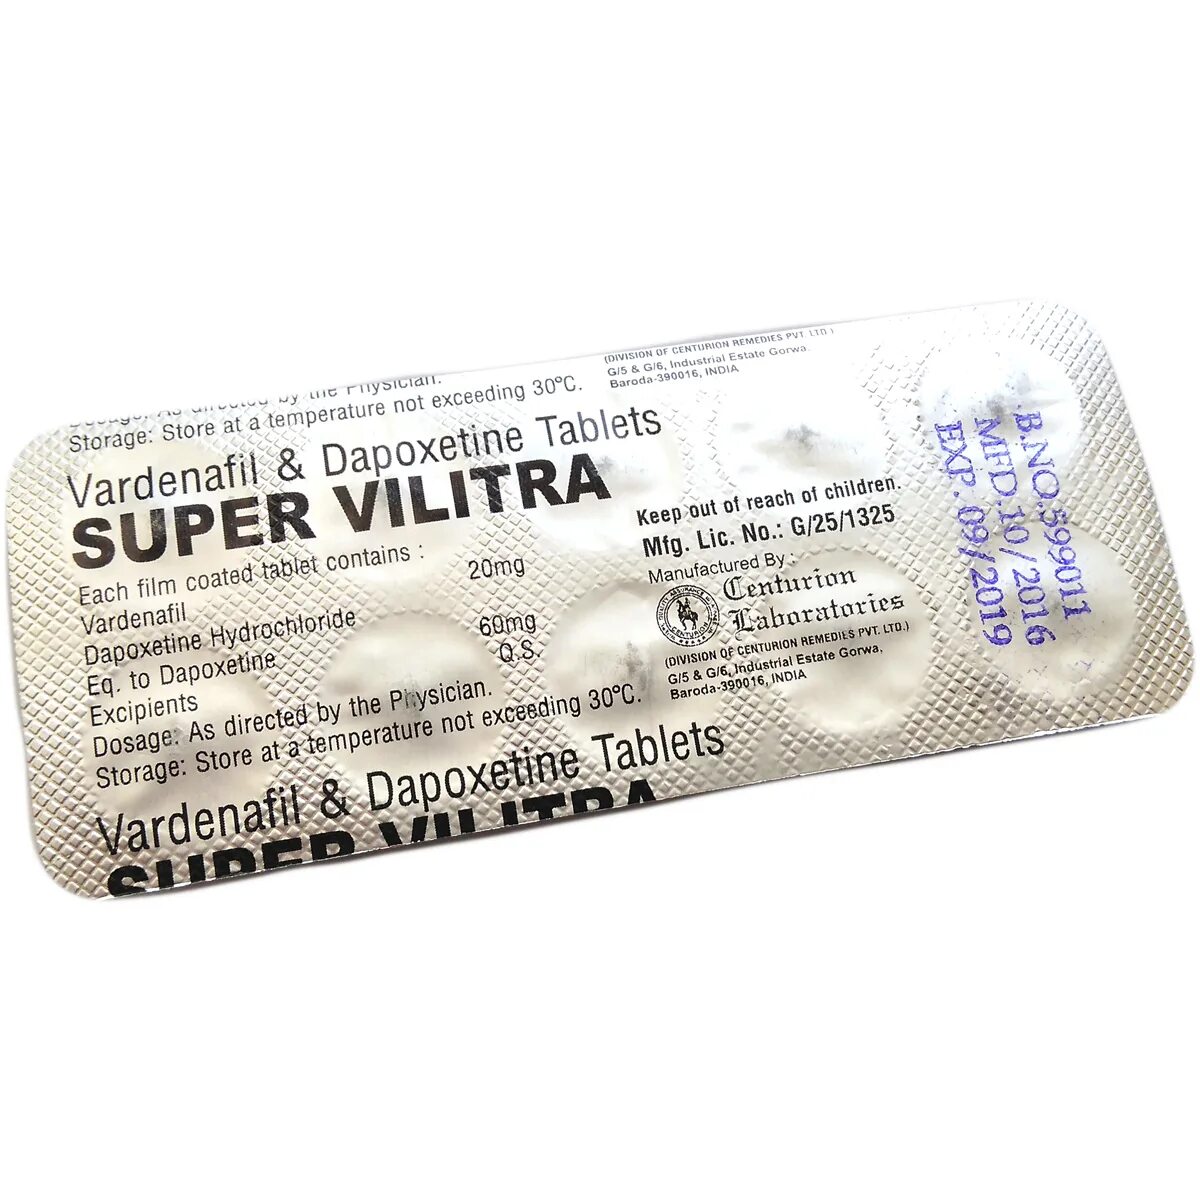 Дженерик super Vilitra. Таблетки для потенции супер Вилитра. Варденафил дапоксетин. Левитра дапоксетин.